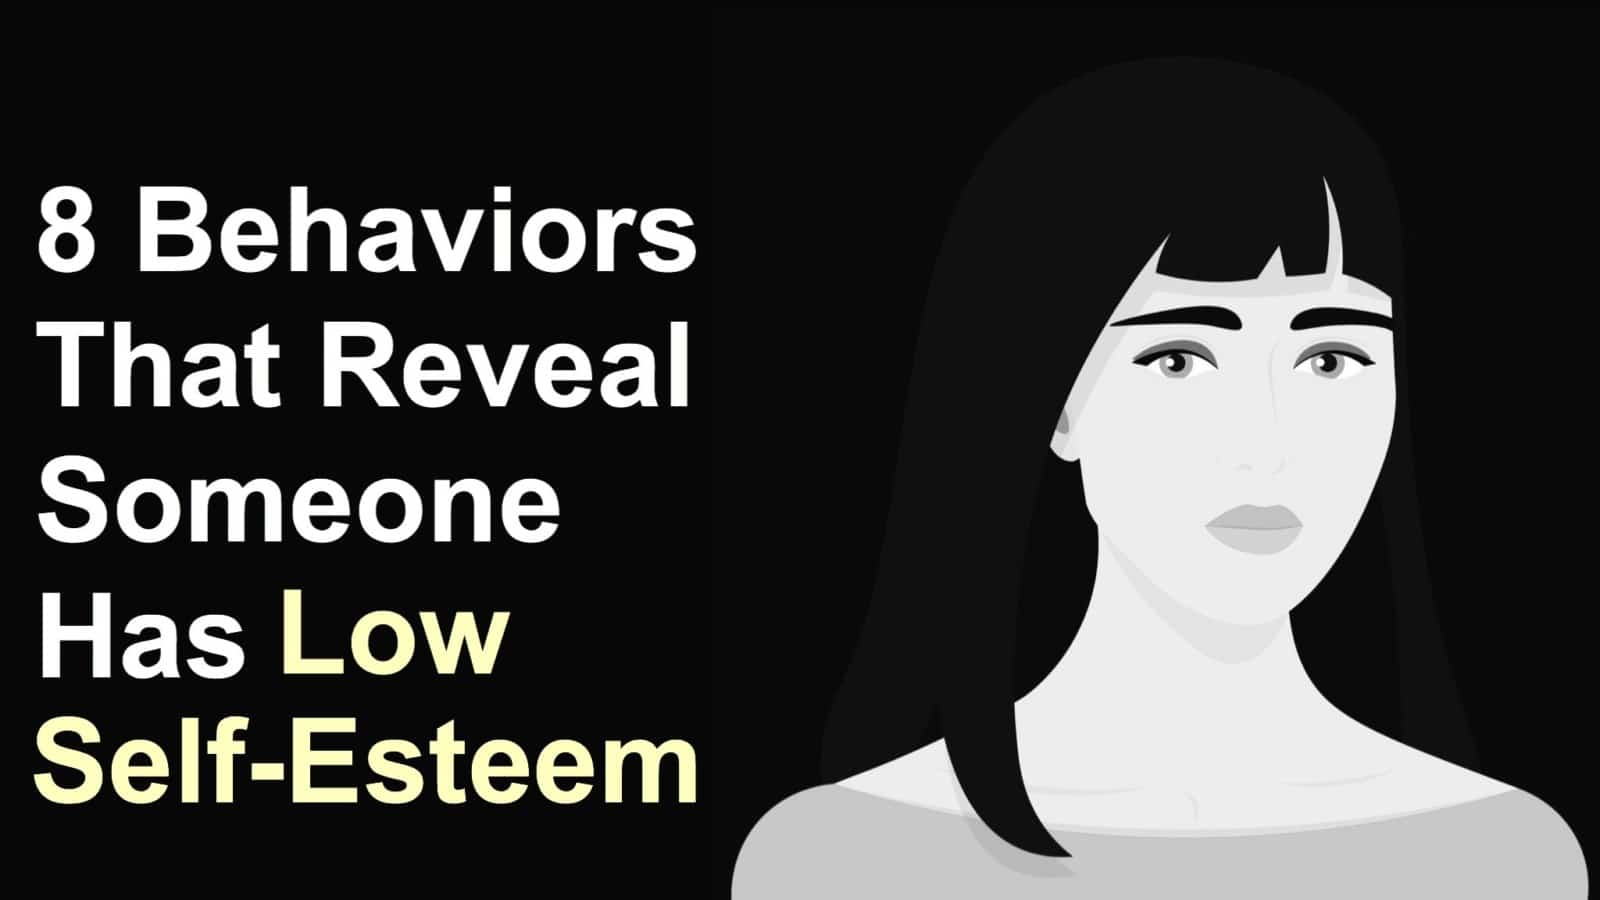 8 Behaviors That Reveal Someone Has Low Self-Esteem